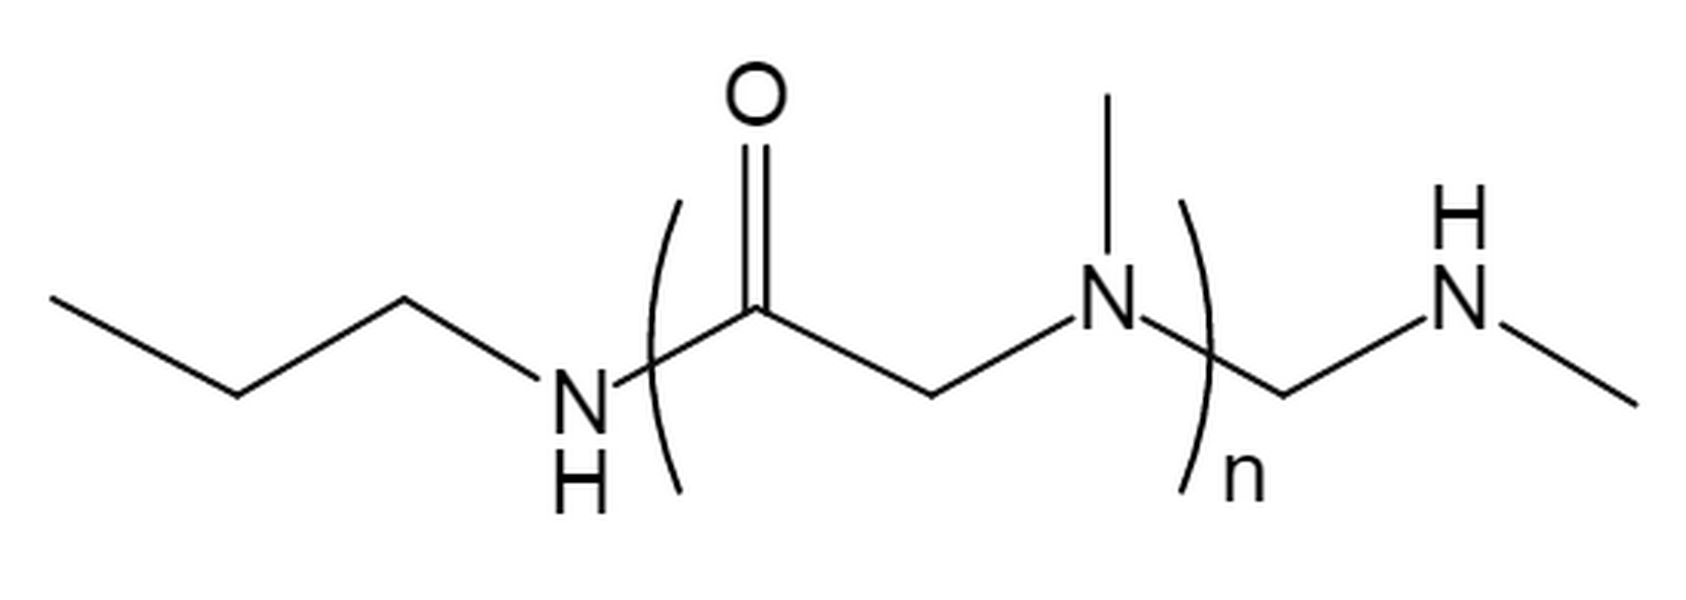 Polysarcosine50